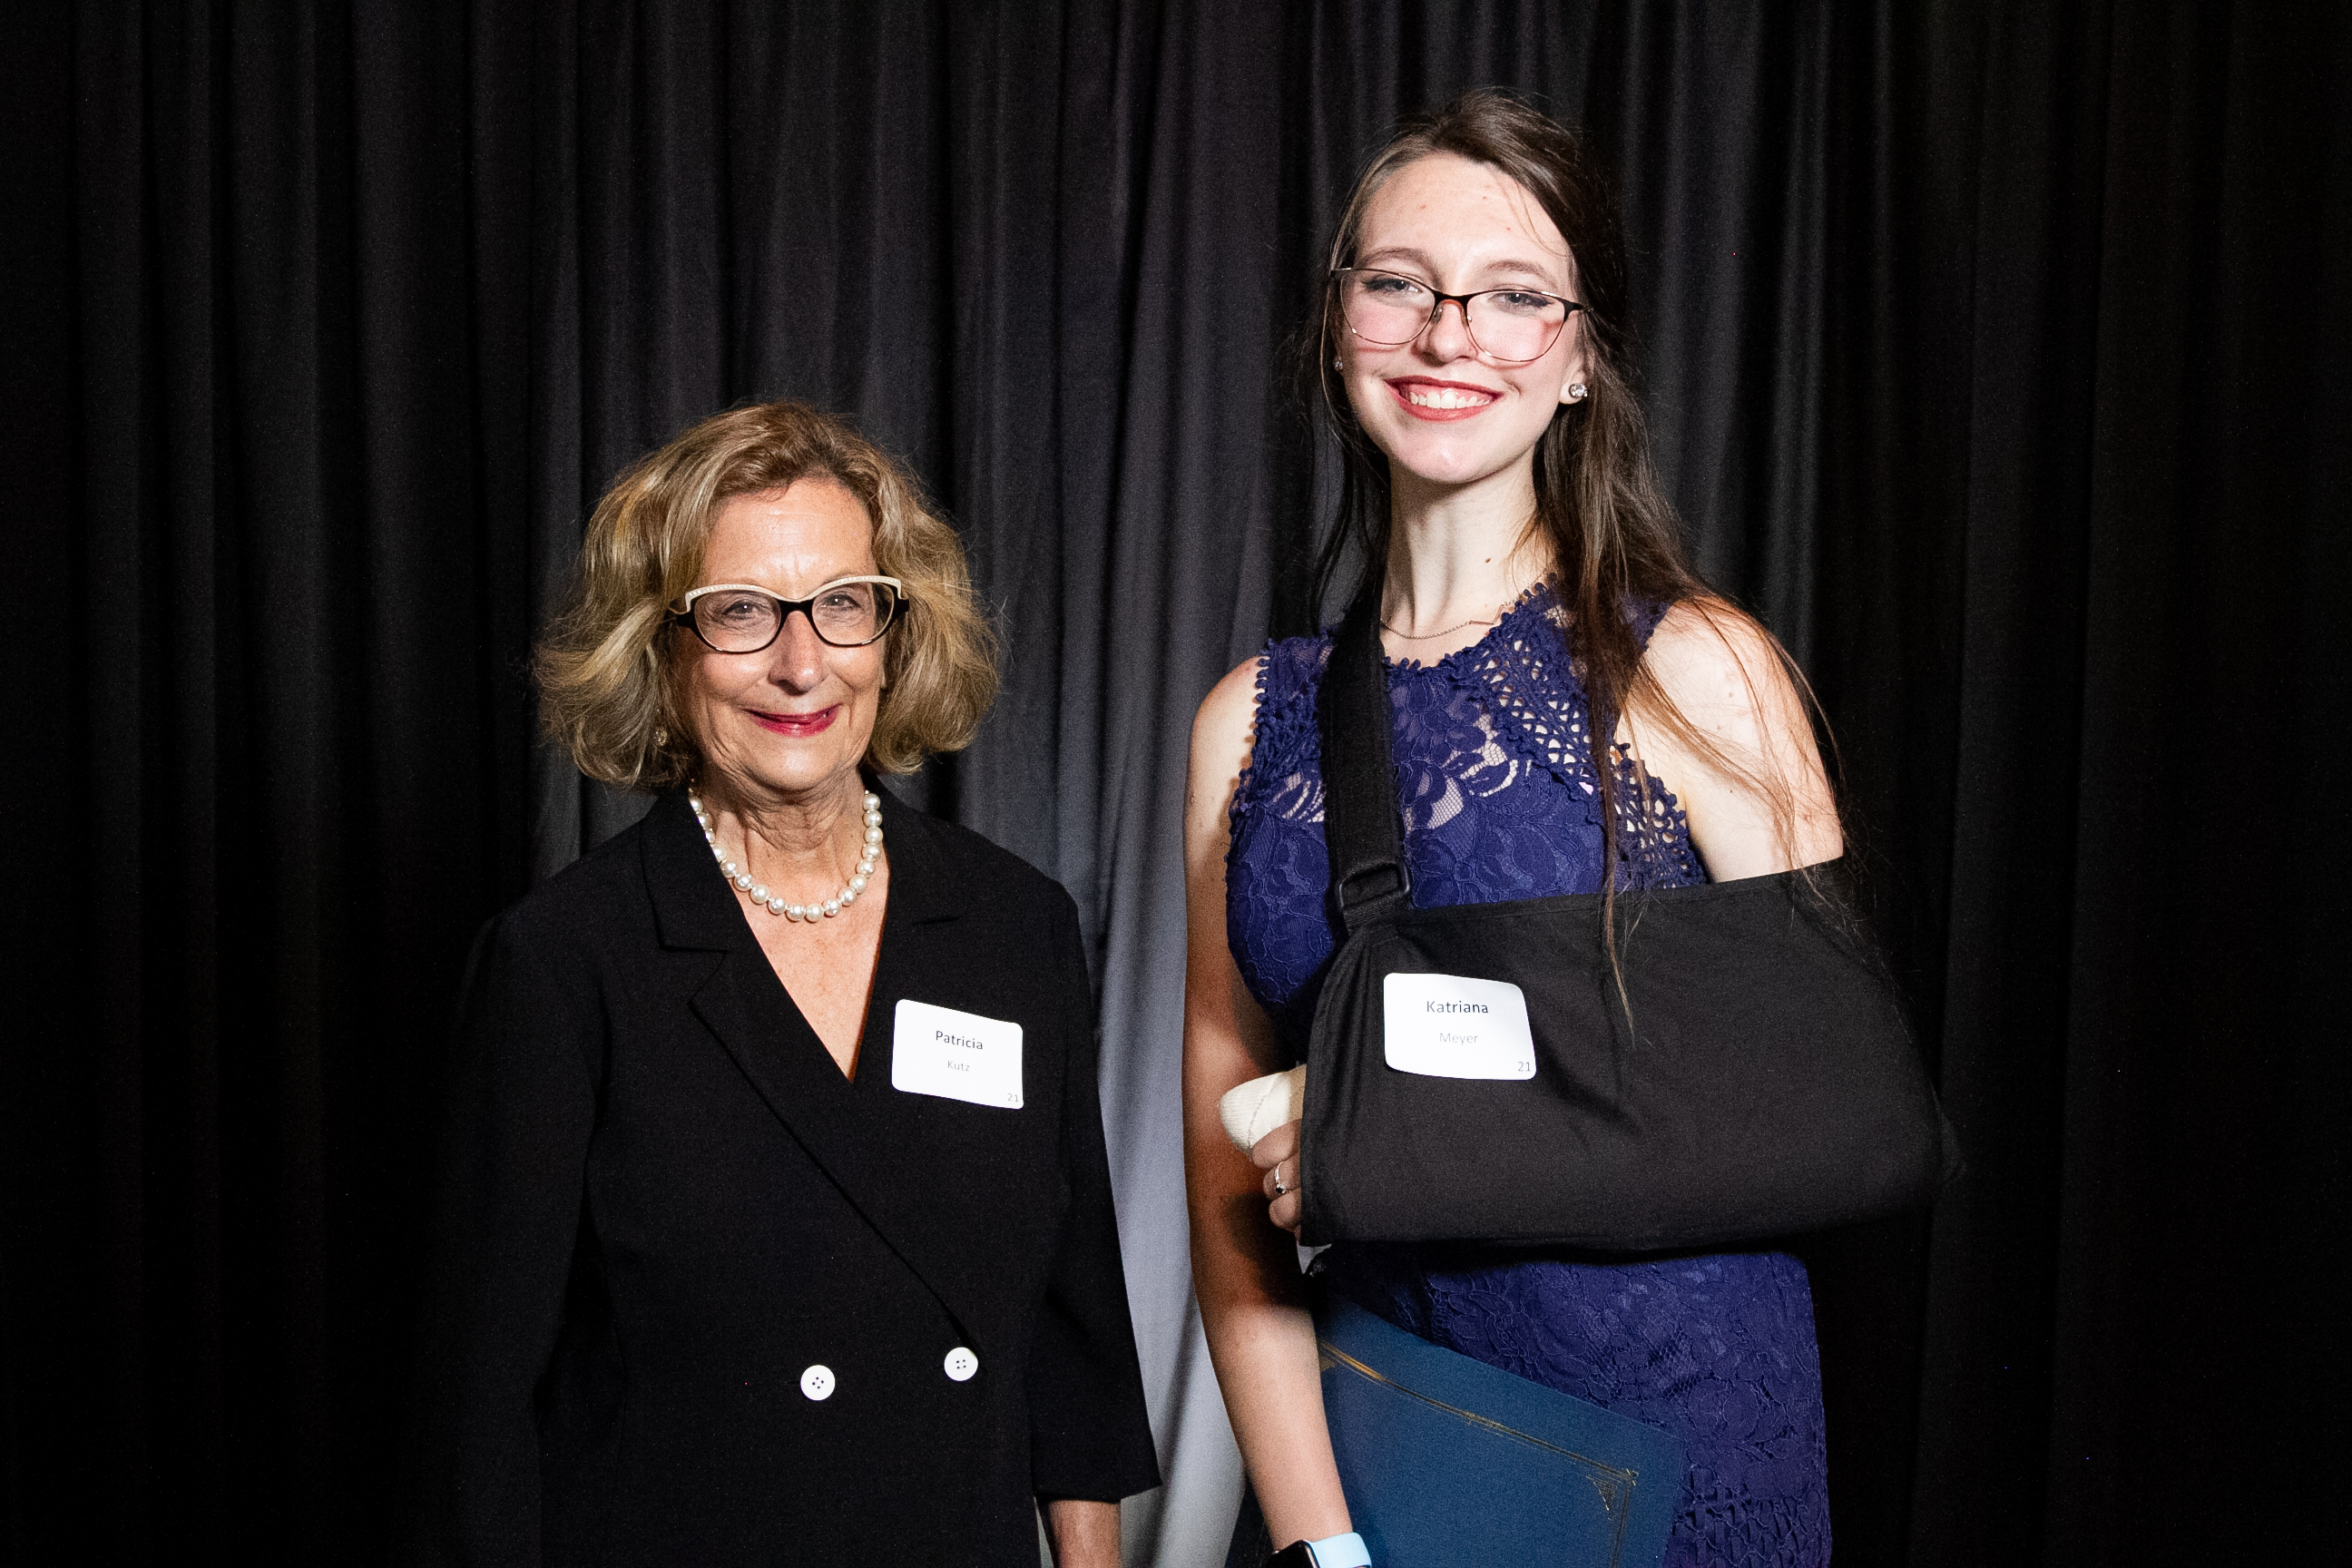 Donor Patricia Kutz with her 2022 recipient Katriana Meyer.